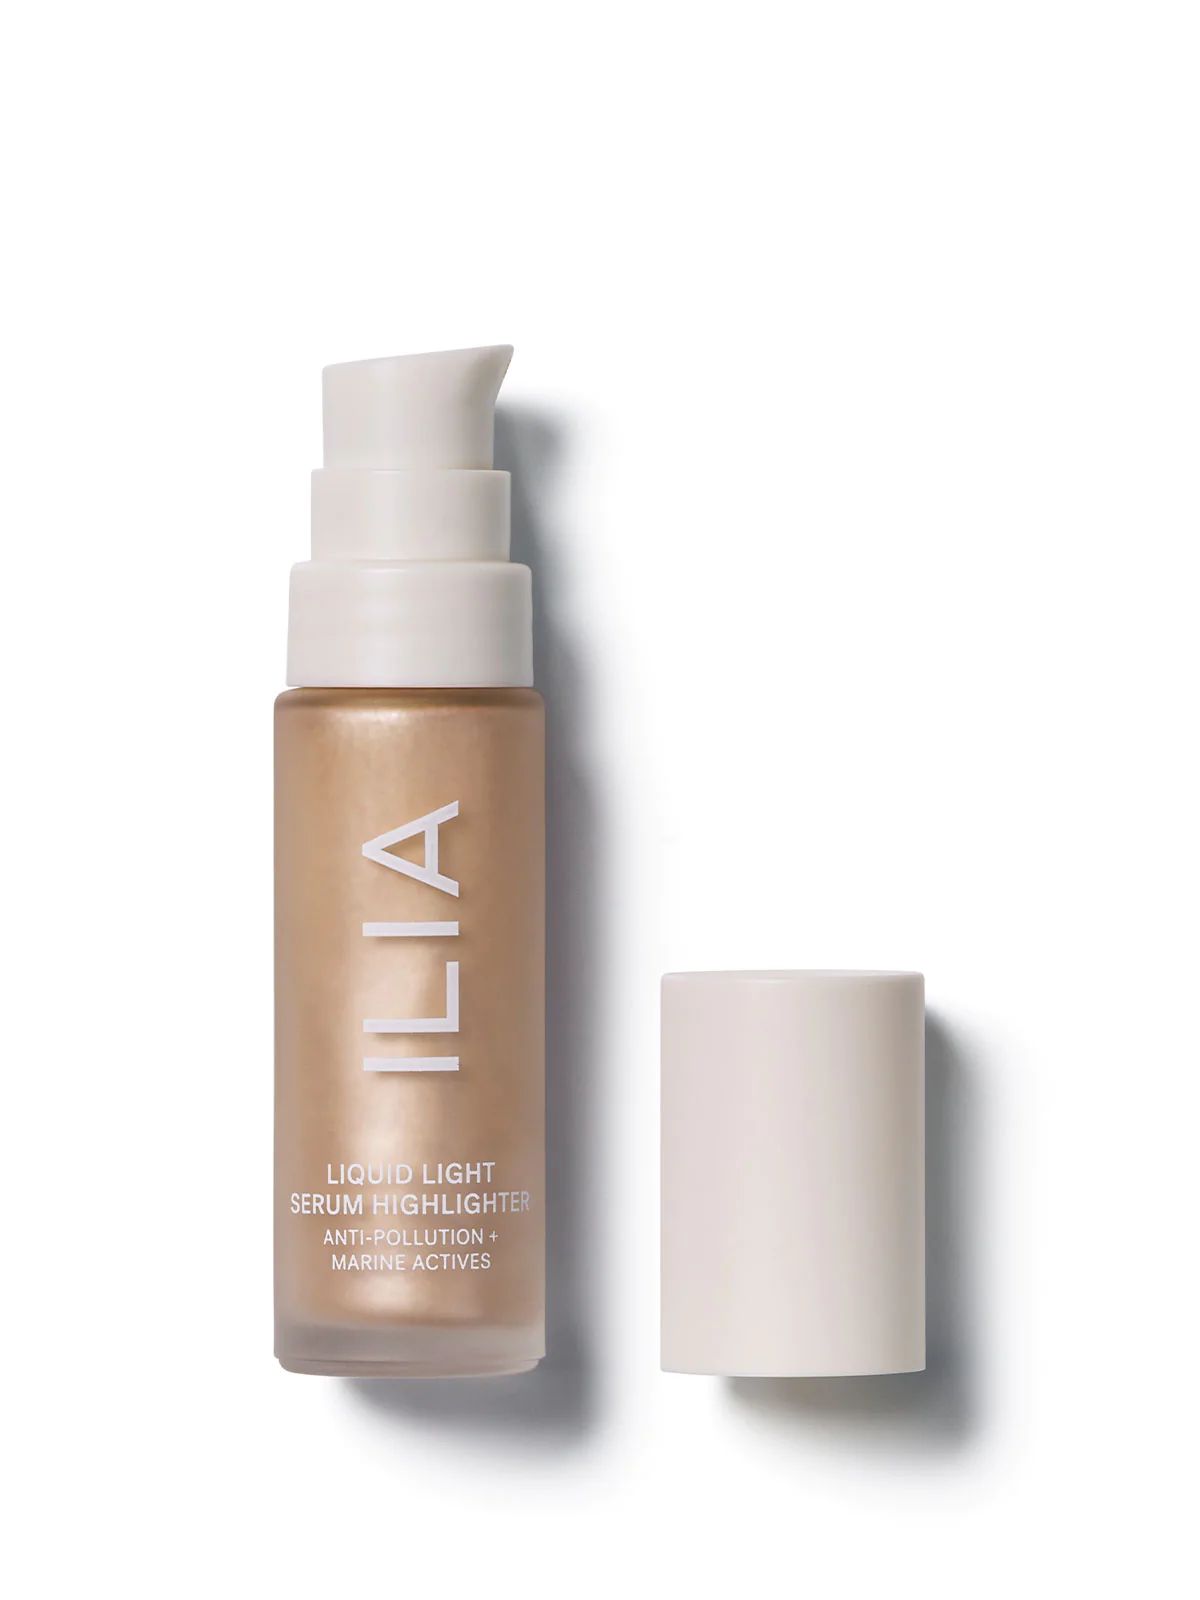 ILIA Liquid Light Serum Highlighter - Nova | ILIA Beauty | ILIA Beauty